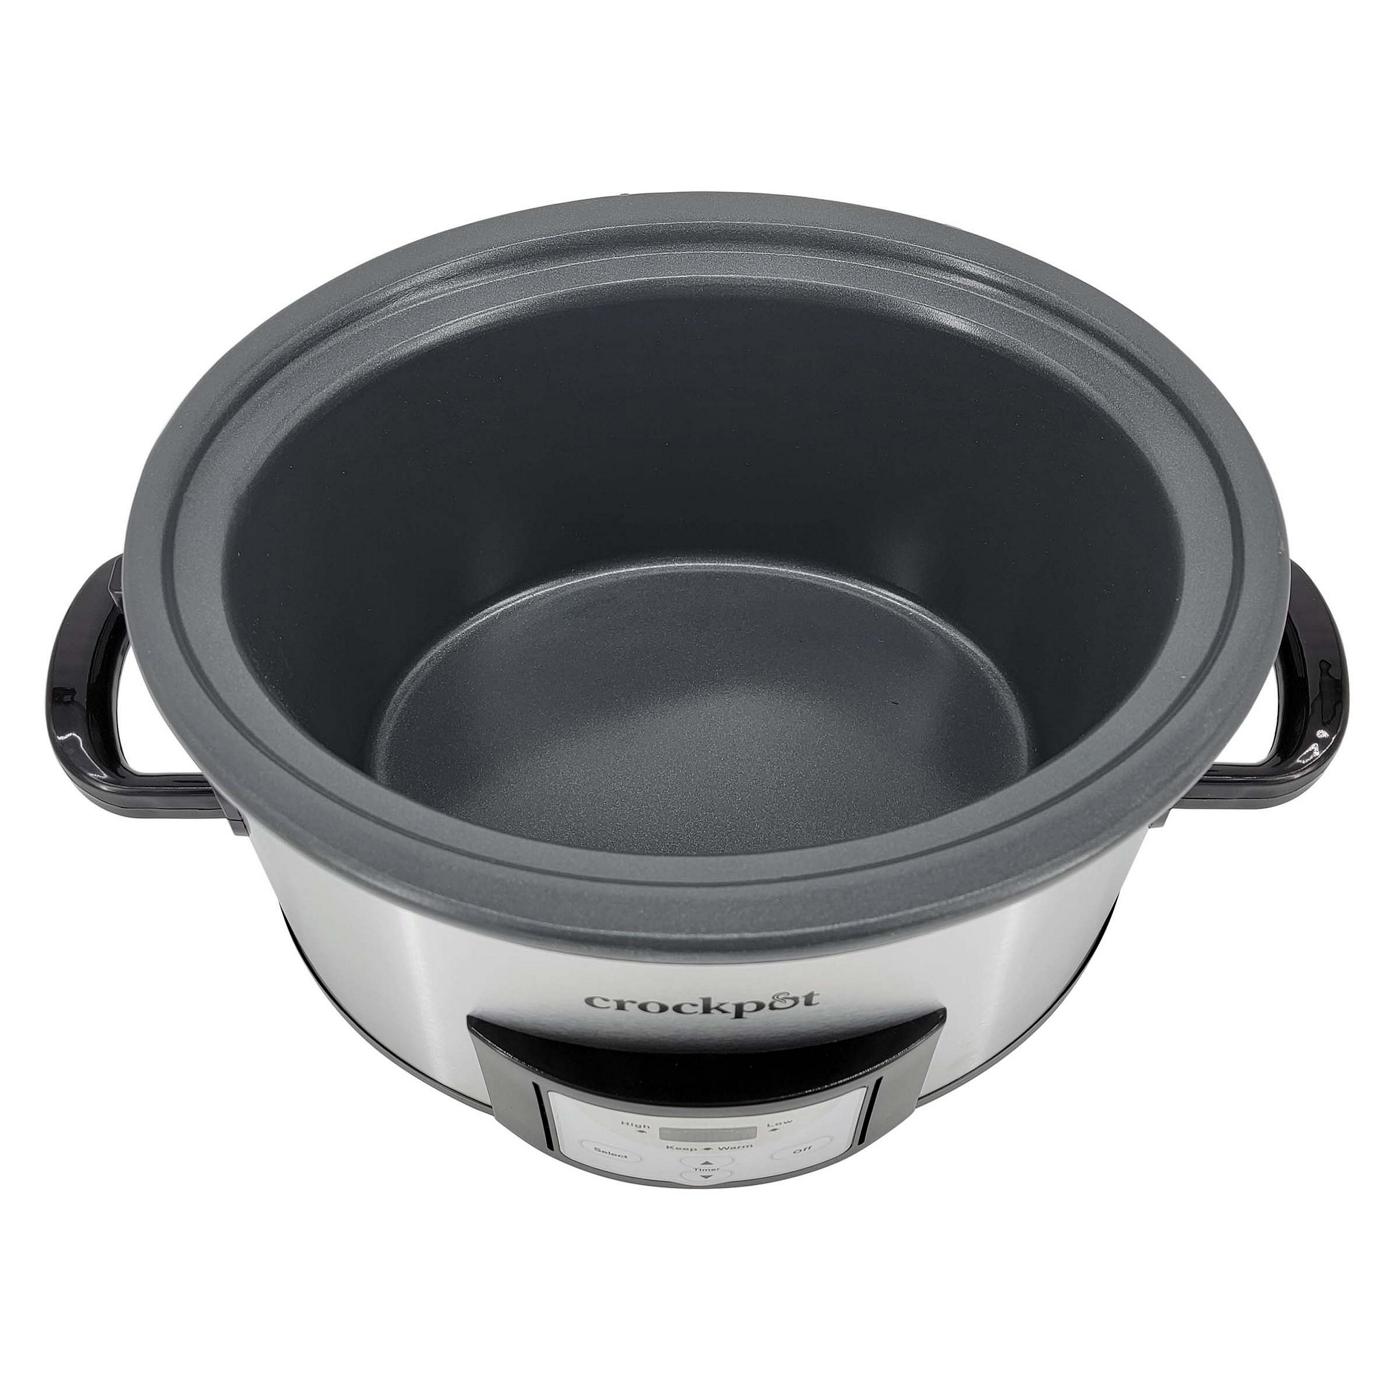 Crock-Pot Cook & Carry Programmable Smart Pot Slow Cooker - Black